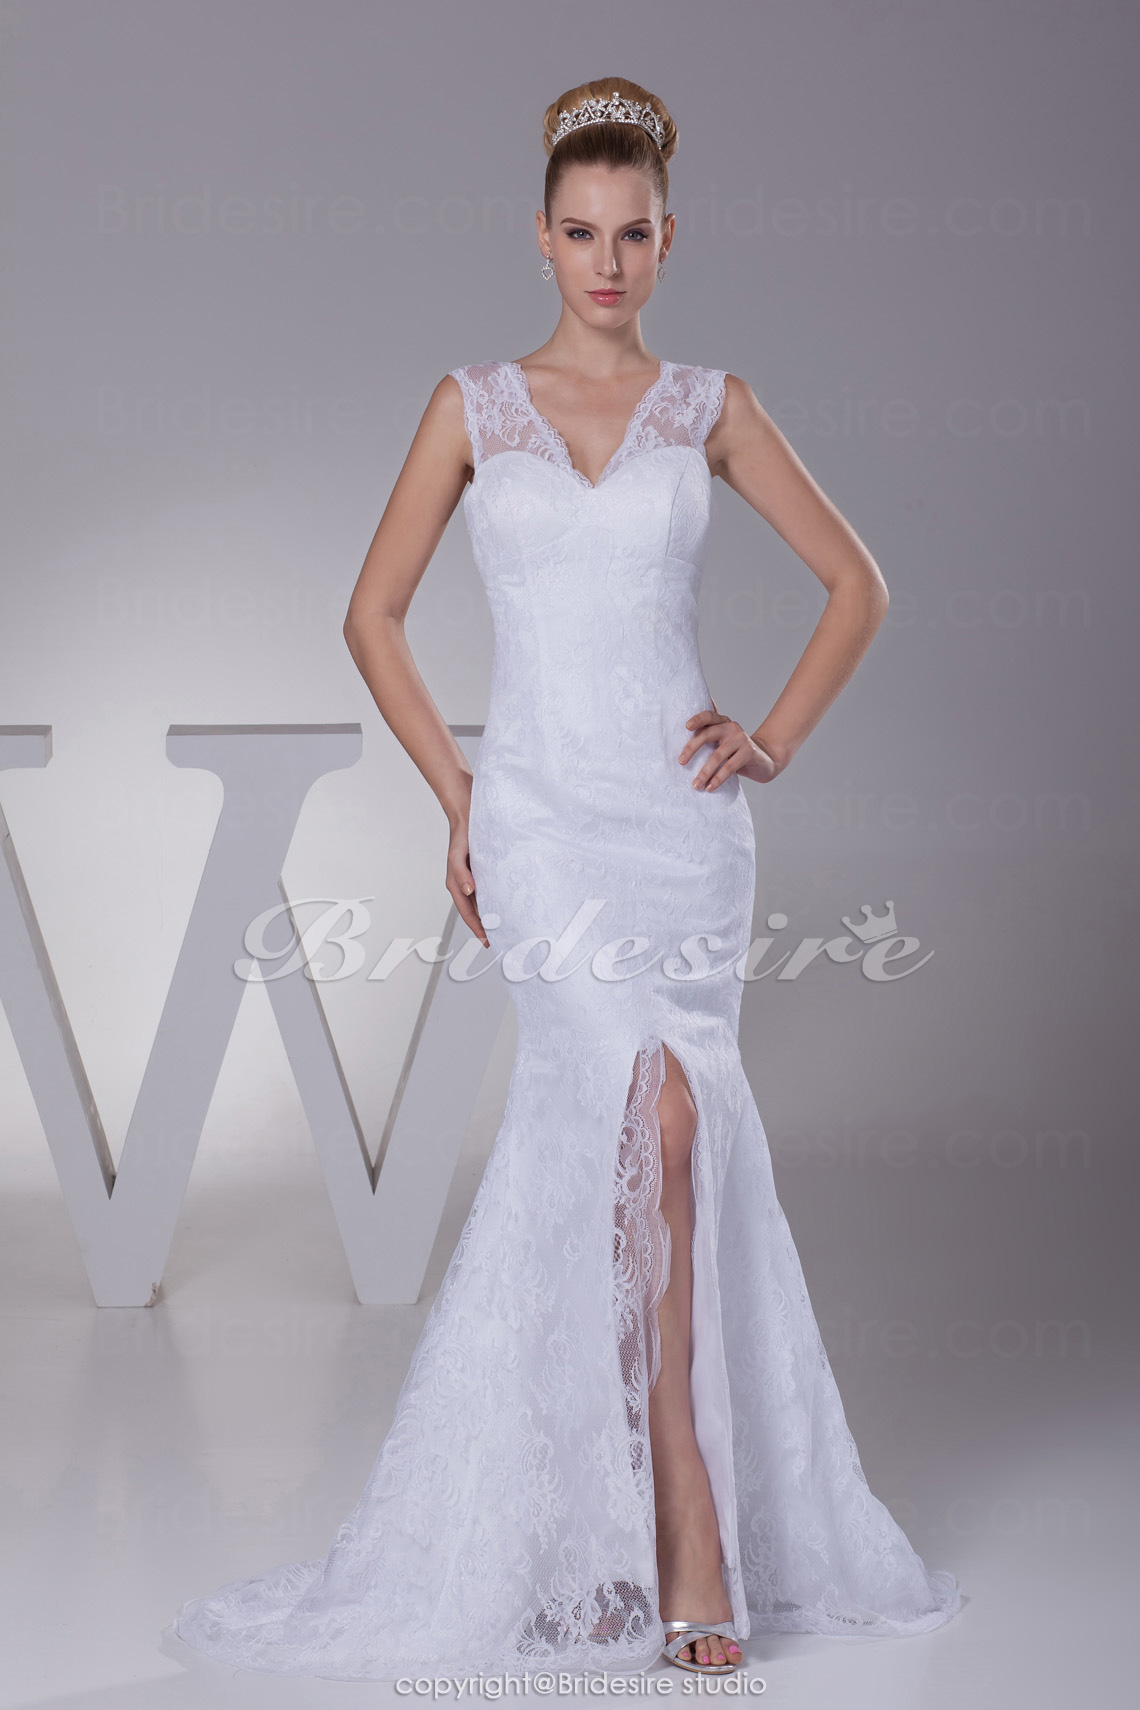 Trumpet/Mermaid V-neck Sweep/Brush Train Sleeveless Satin Lace Wedding Dress